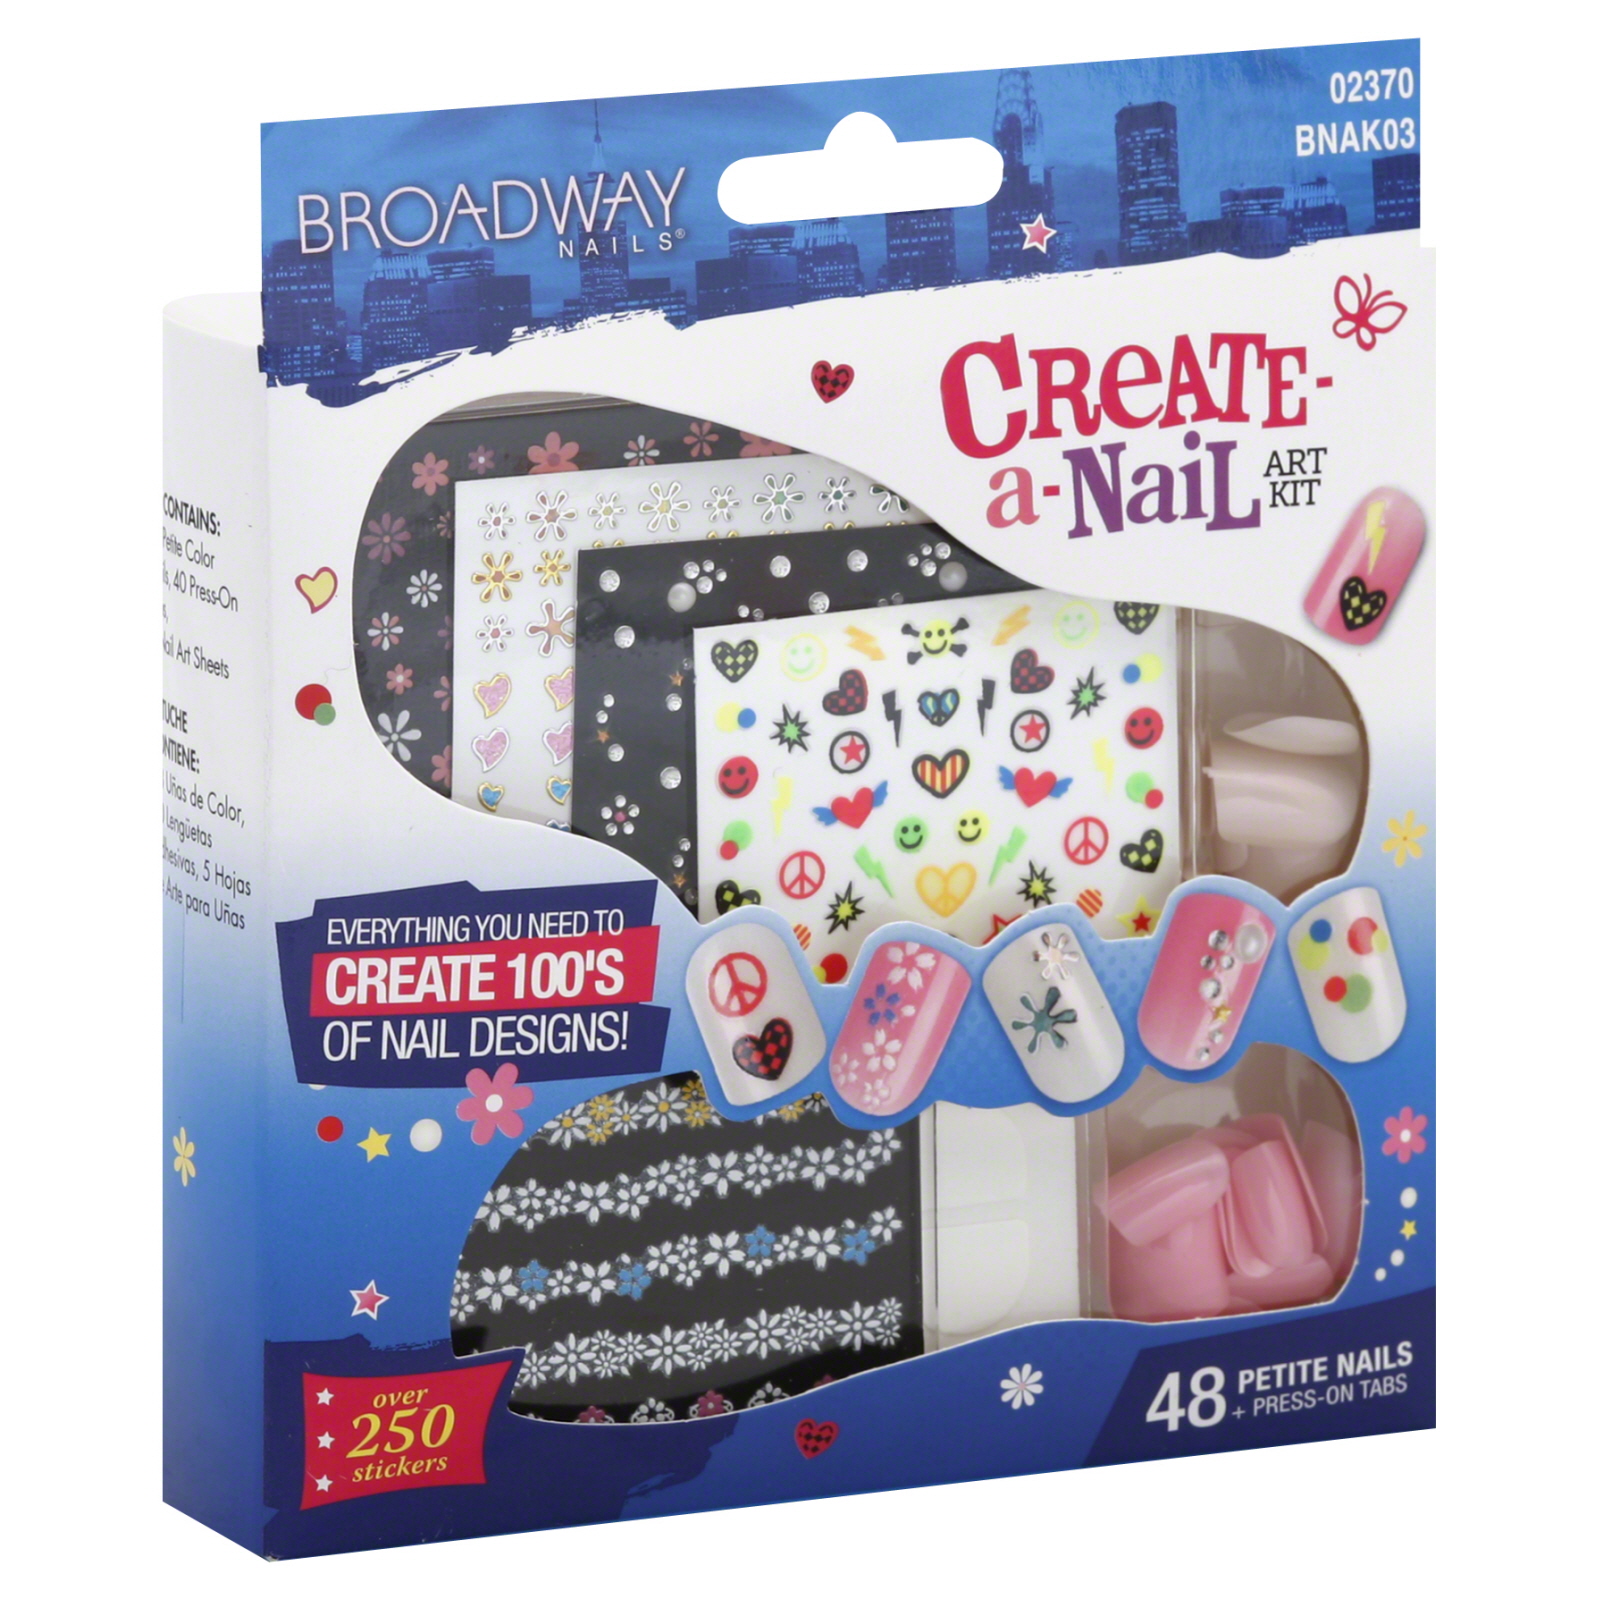 Broadway Nails Art Kit, Create-A-Nail, 1 kit